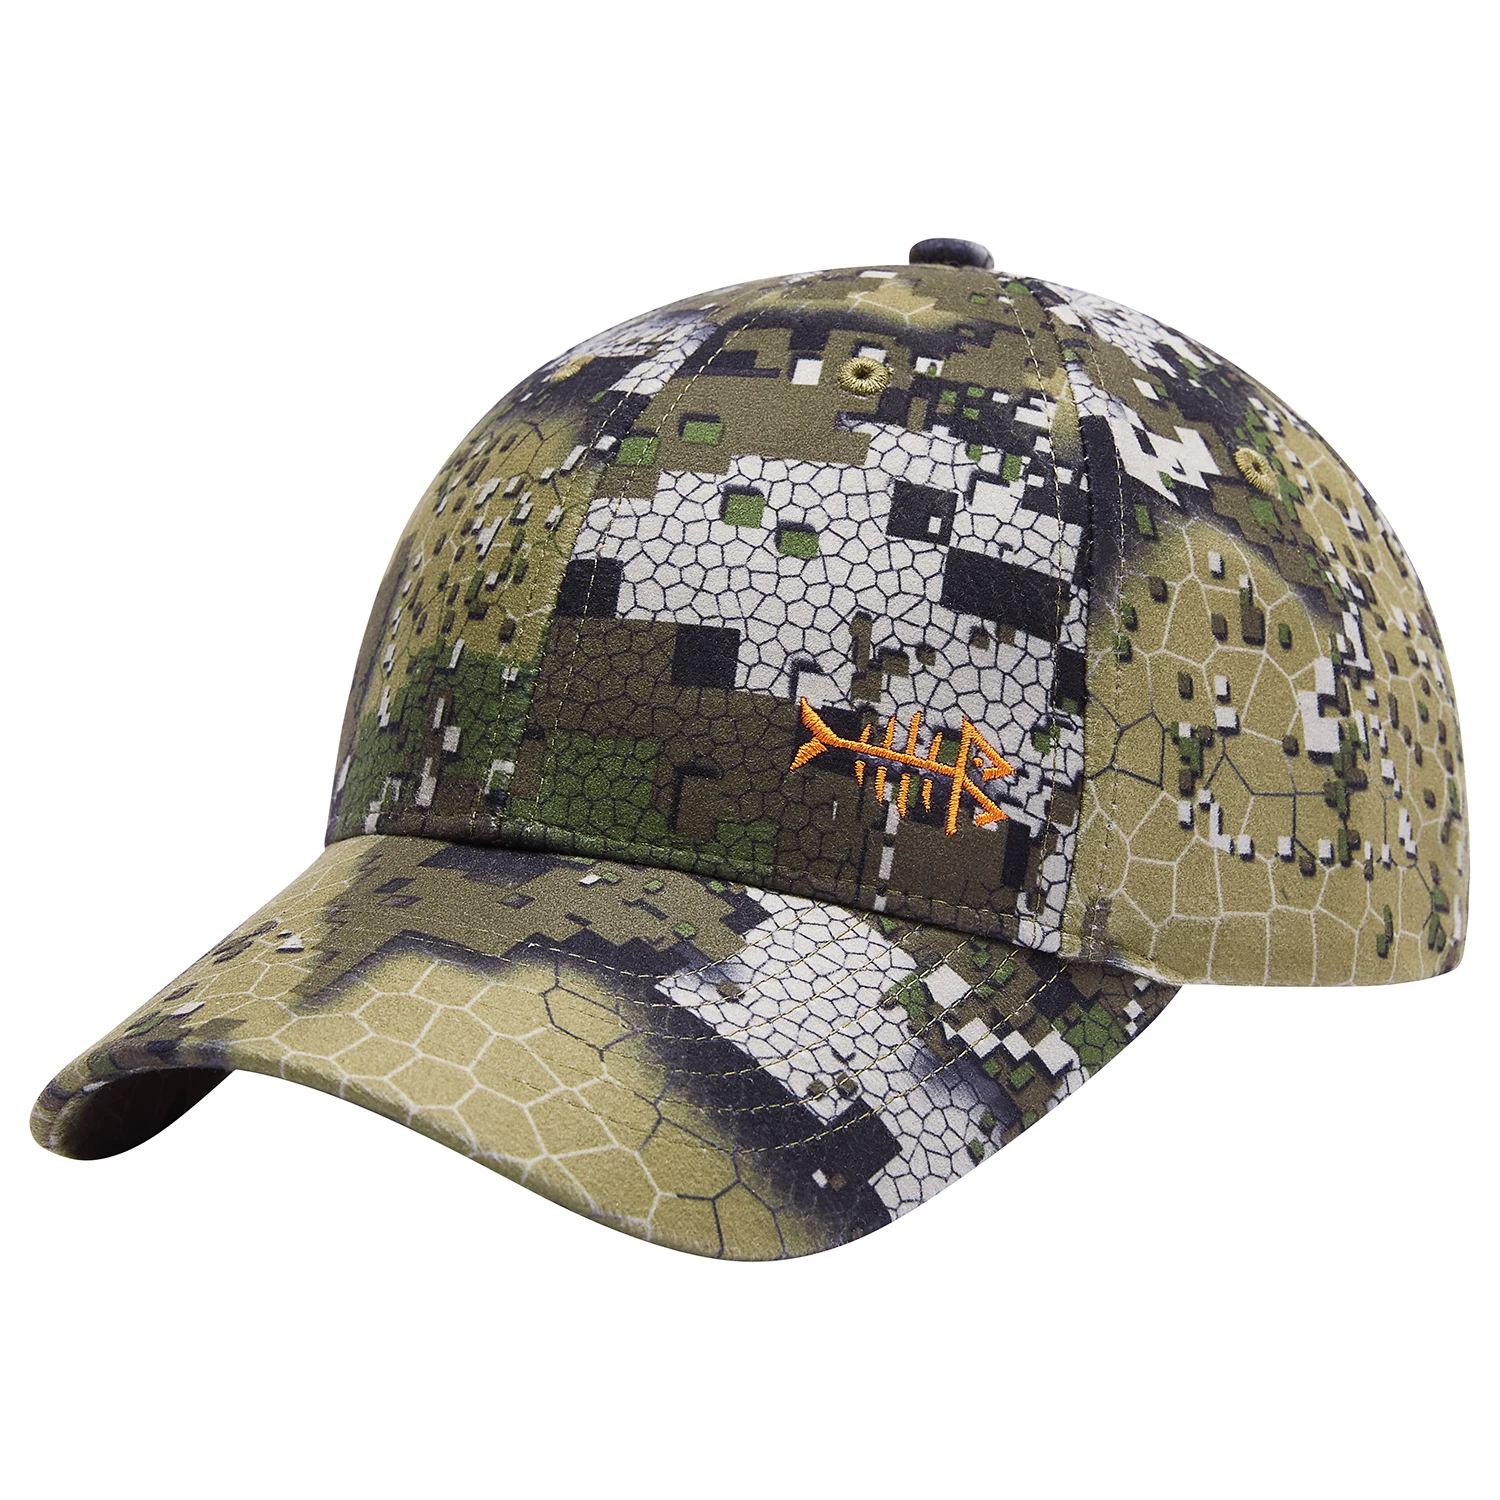 Bassdash Camo Fishing Camouflage Cap Hunting Hat Unisex